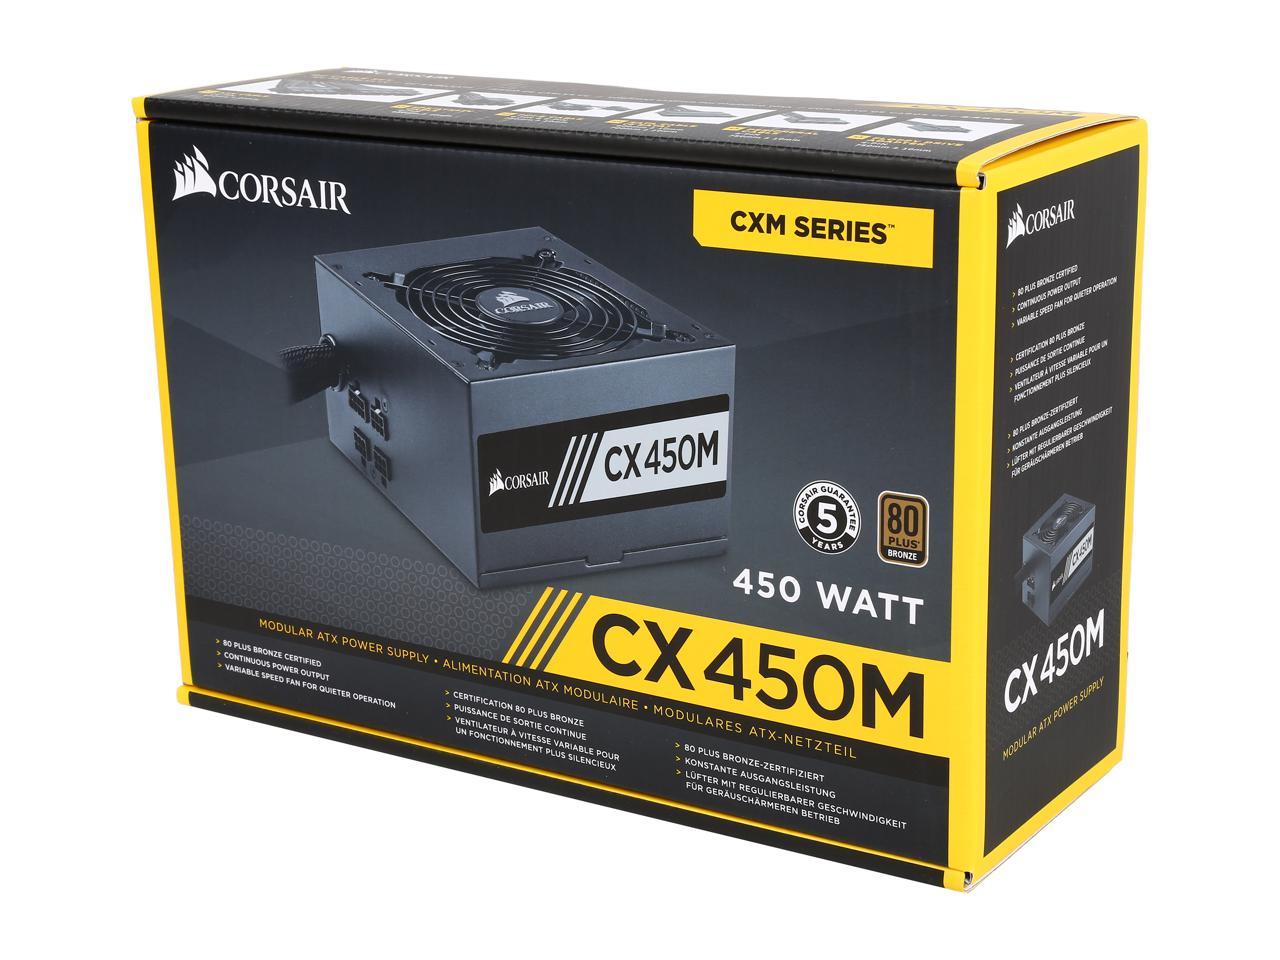 CORSAIR CXM series CX450M 450W 80 PLUS BRONZE Haswell Ready ATX12V & EPS12V Modular Power Supply